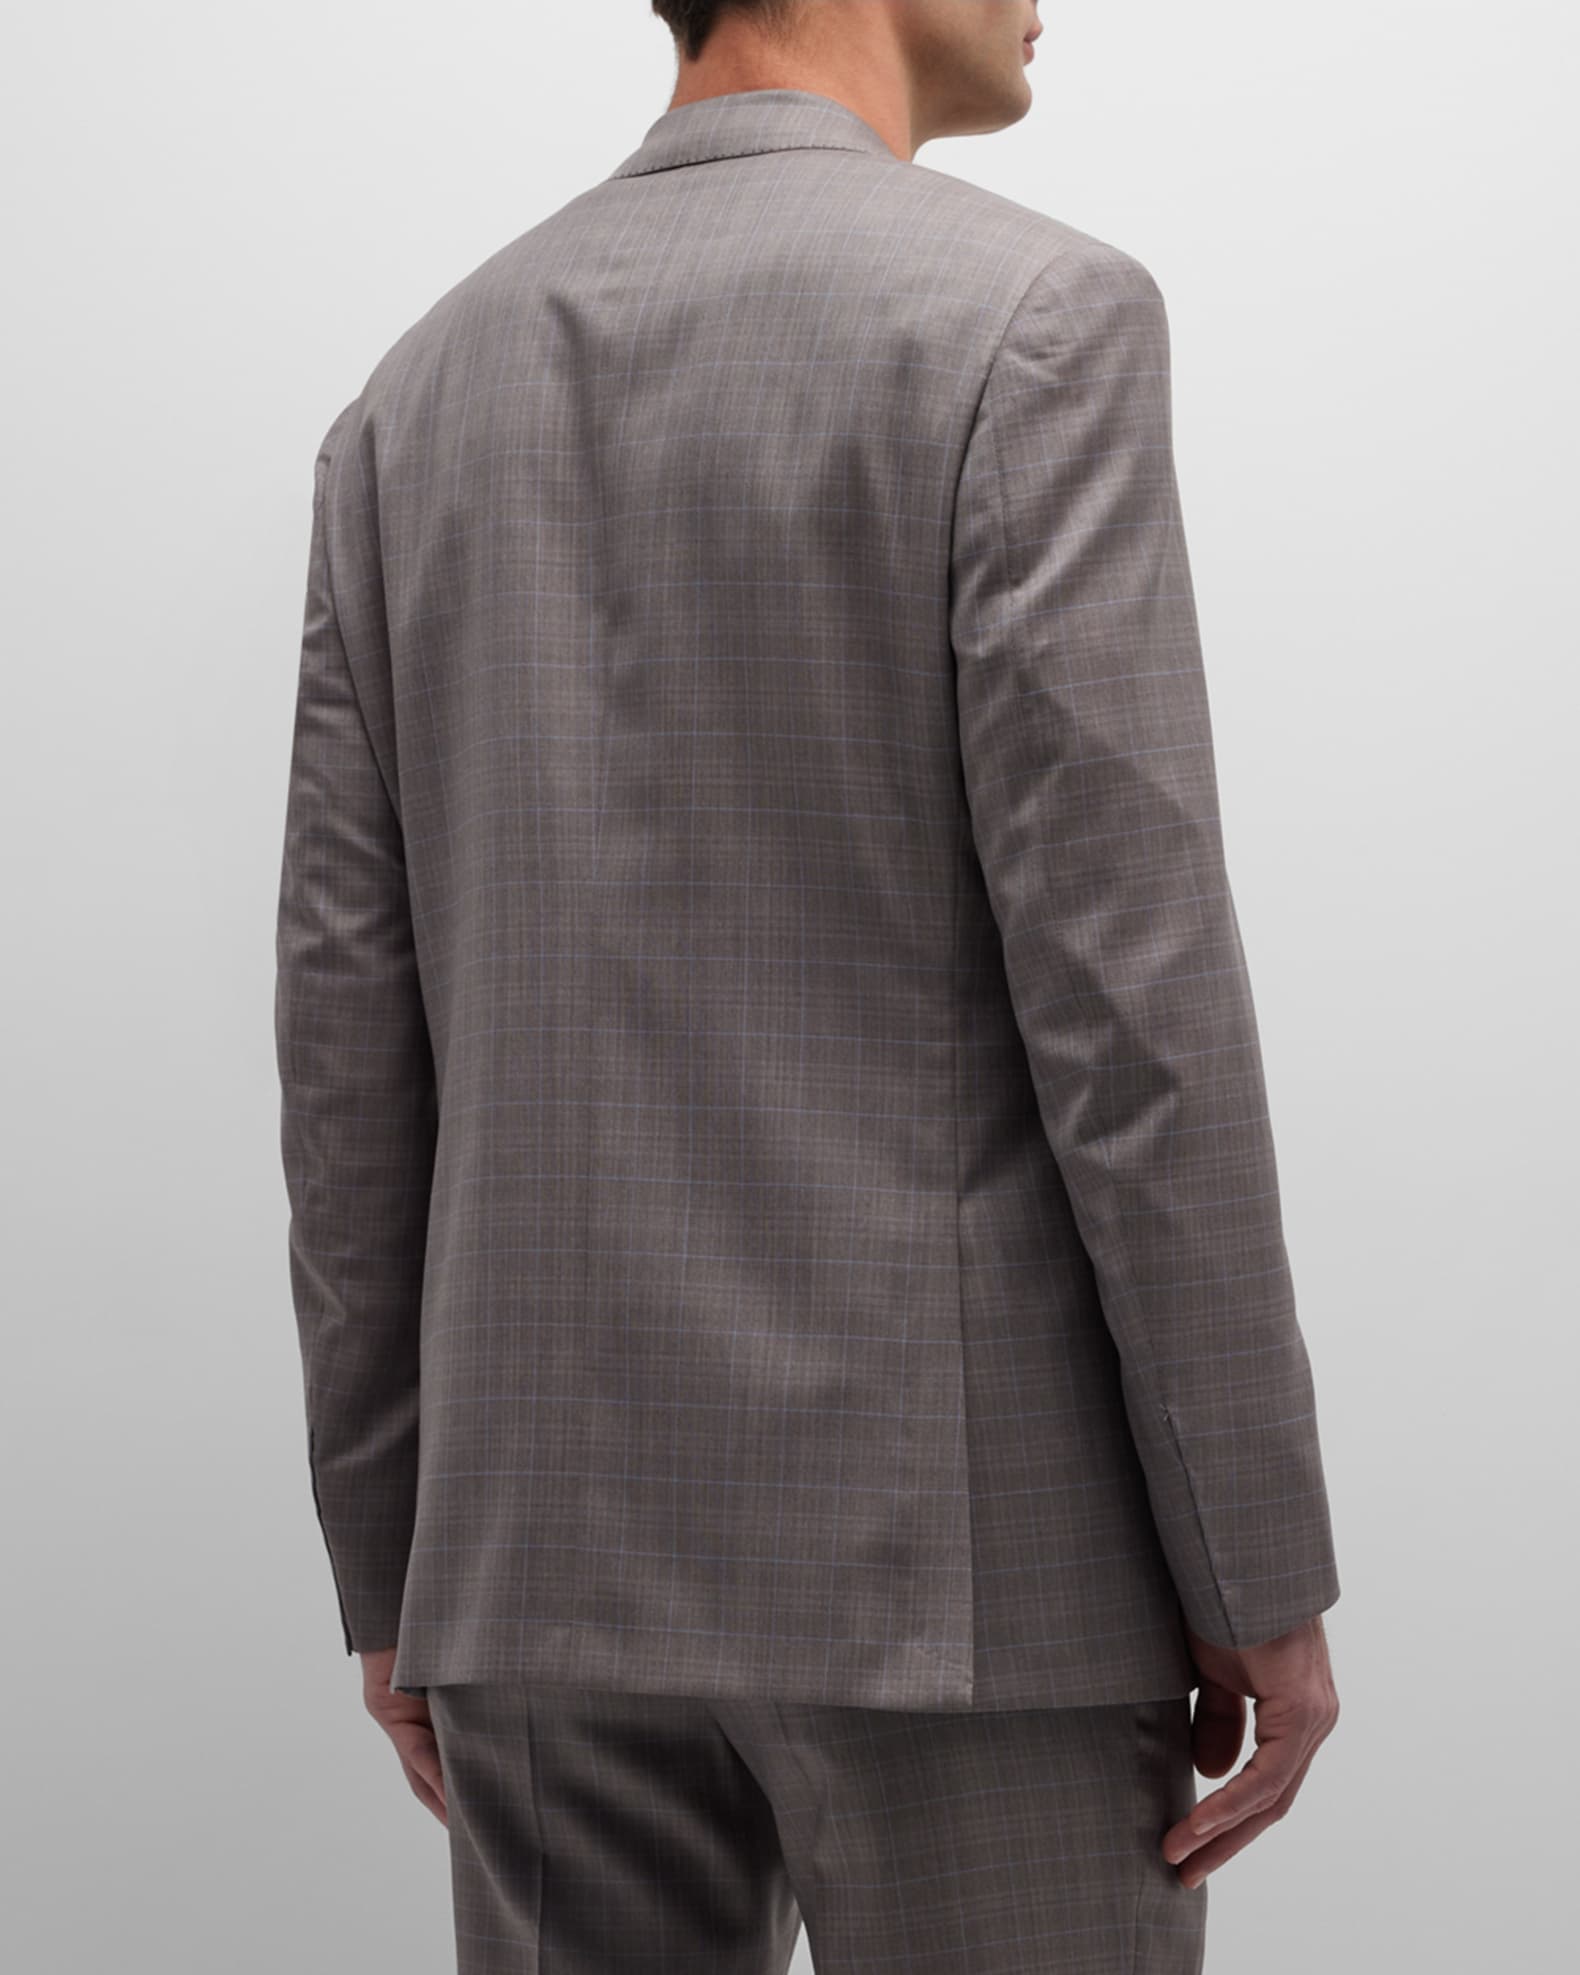 Stefano Ricci Beige Plaid Two-Piece Wool Suit | Neiman Marcus